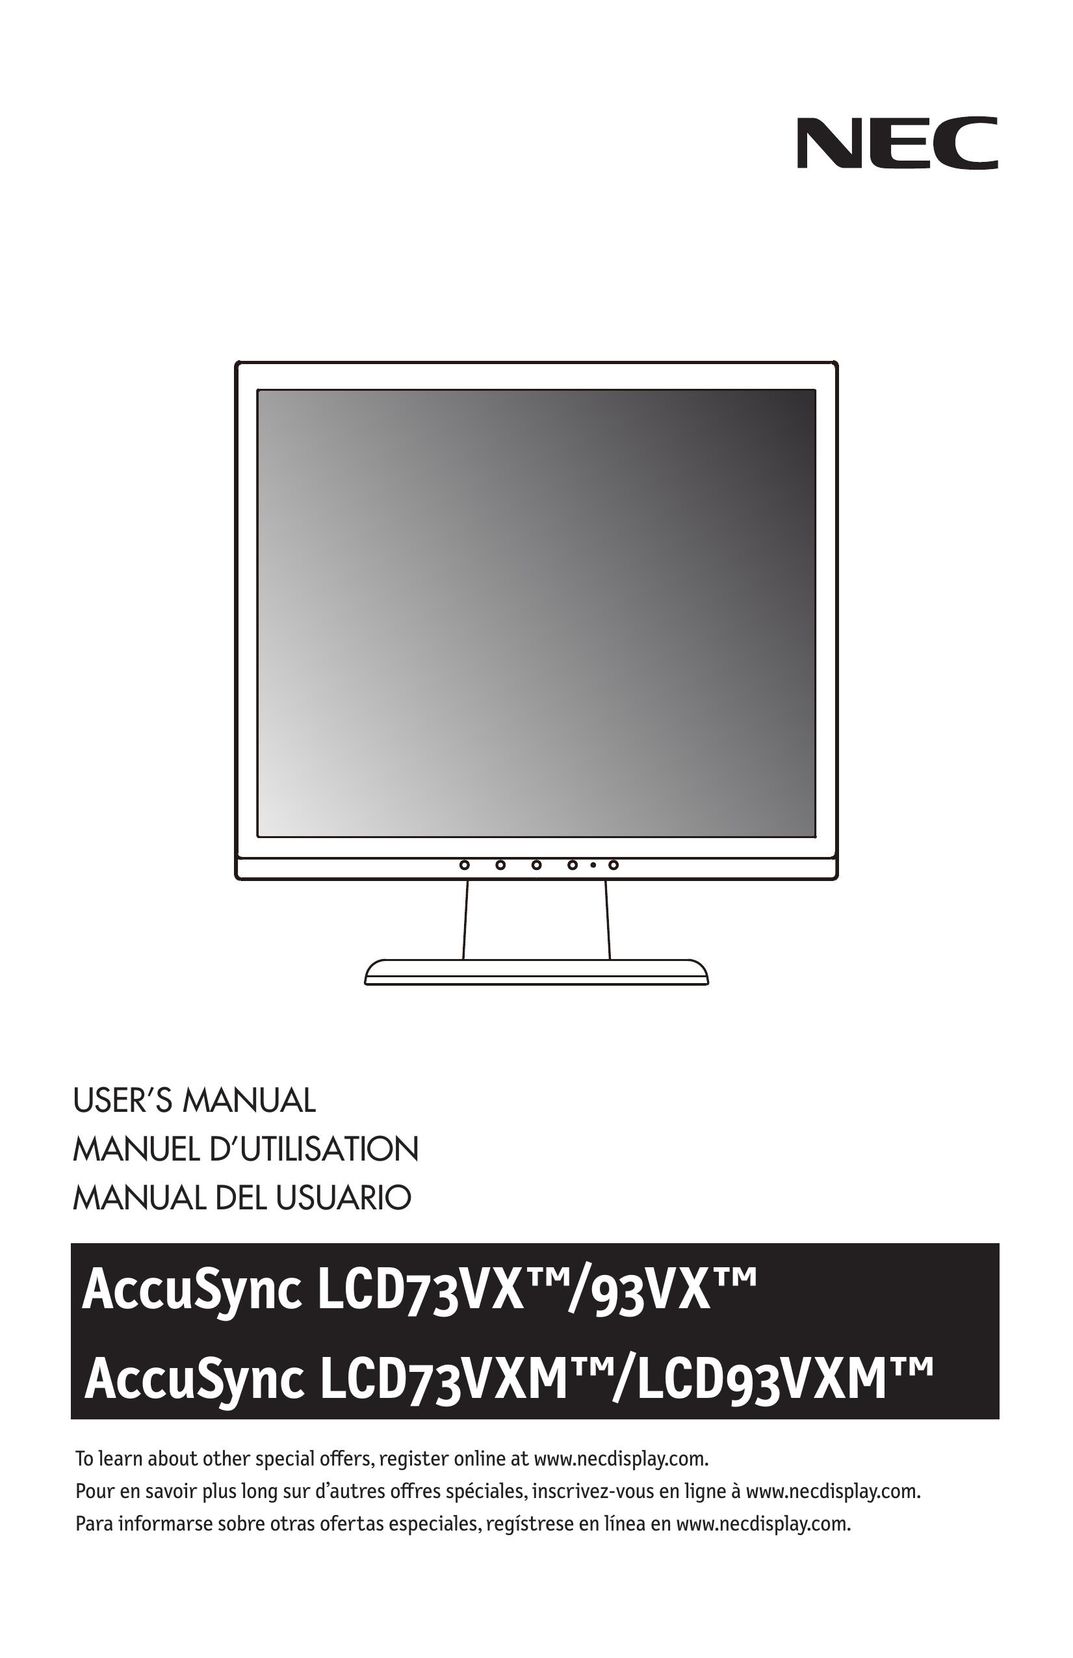 NEC LCD73VXTM Car Video System User Manual